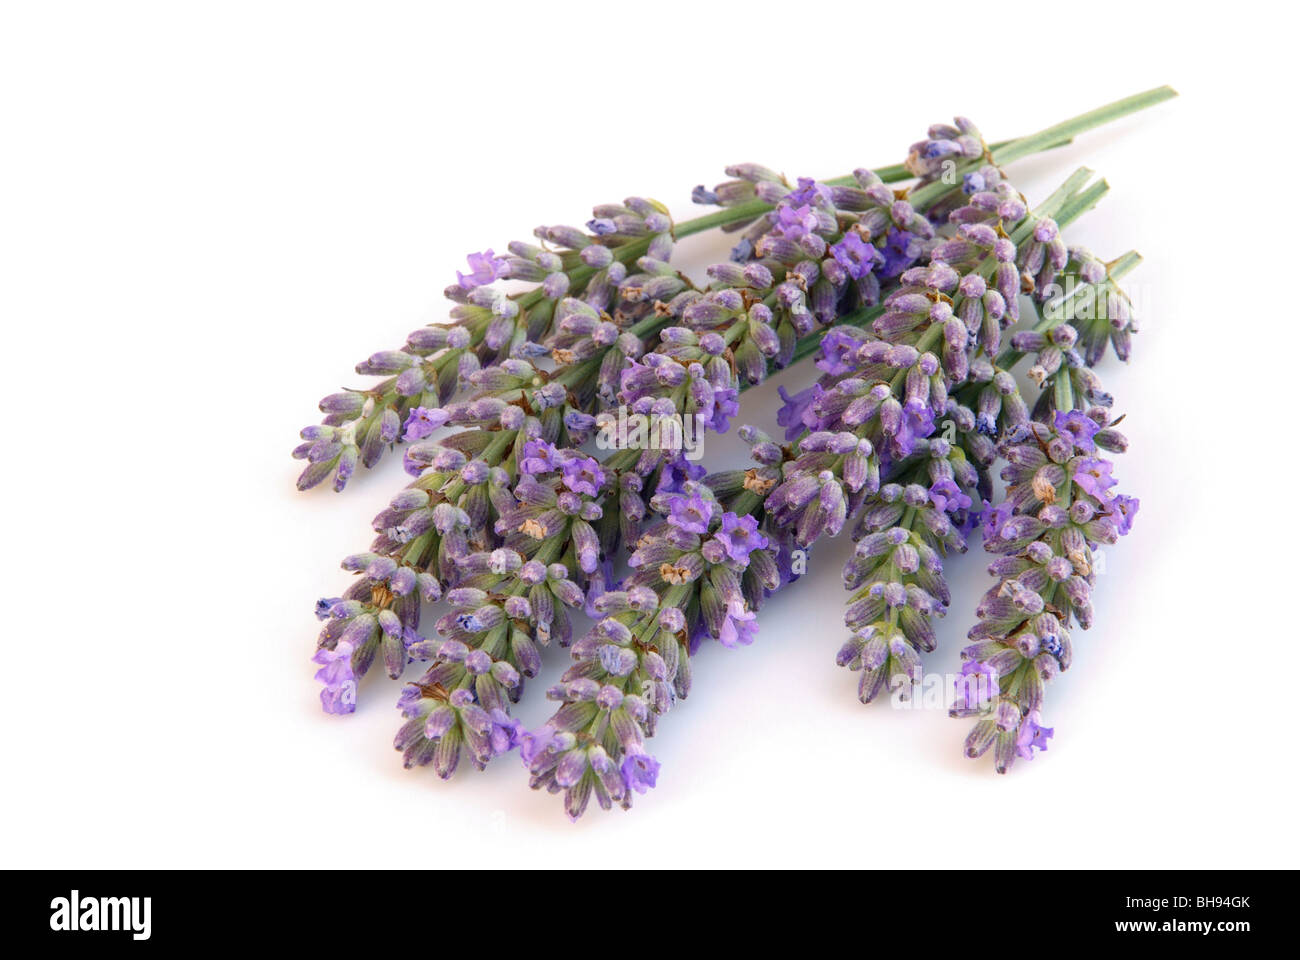 Lavendel freigestellt - lavanda isolato 01 Foto Stock